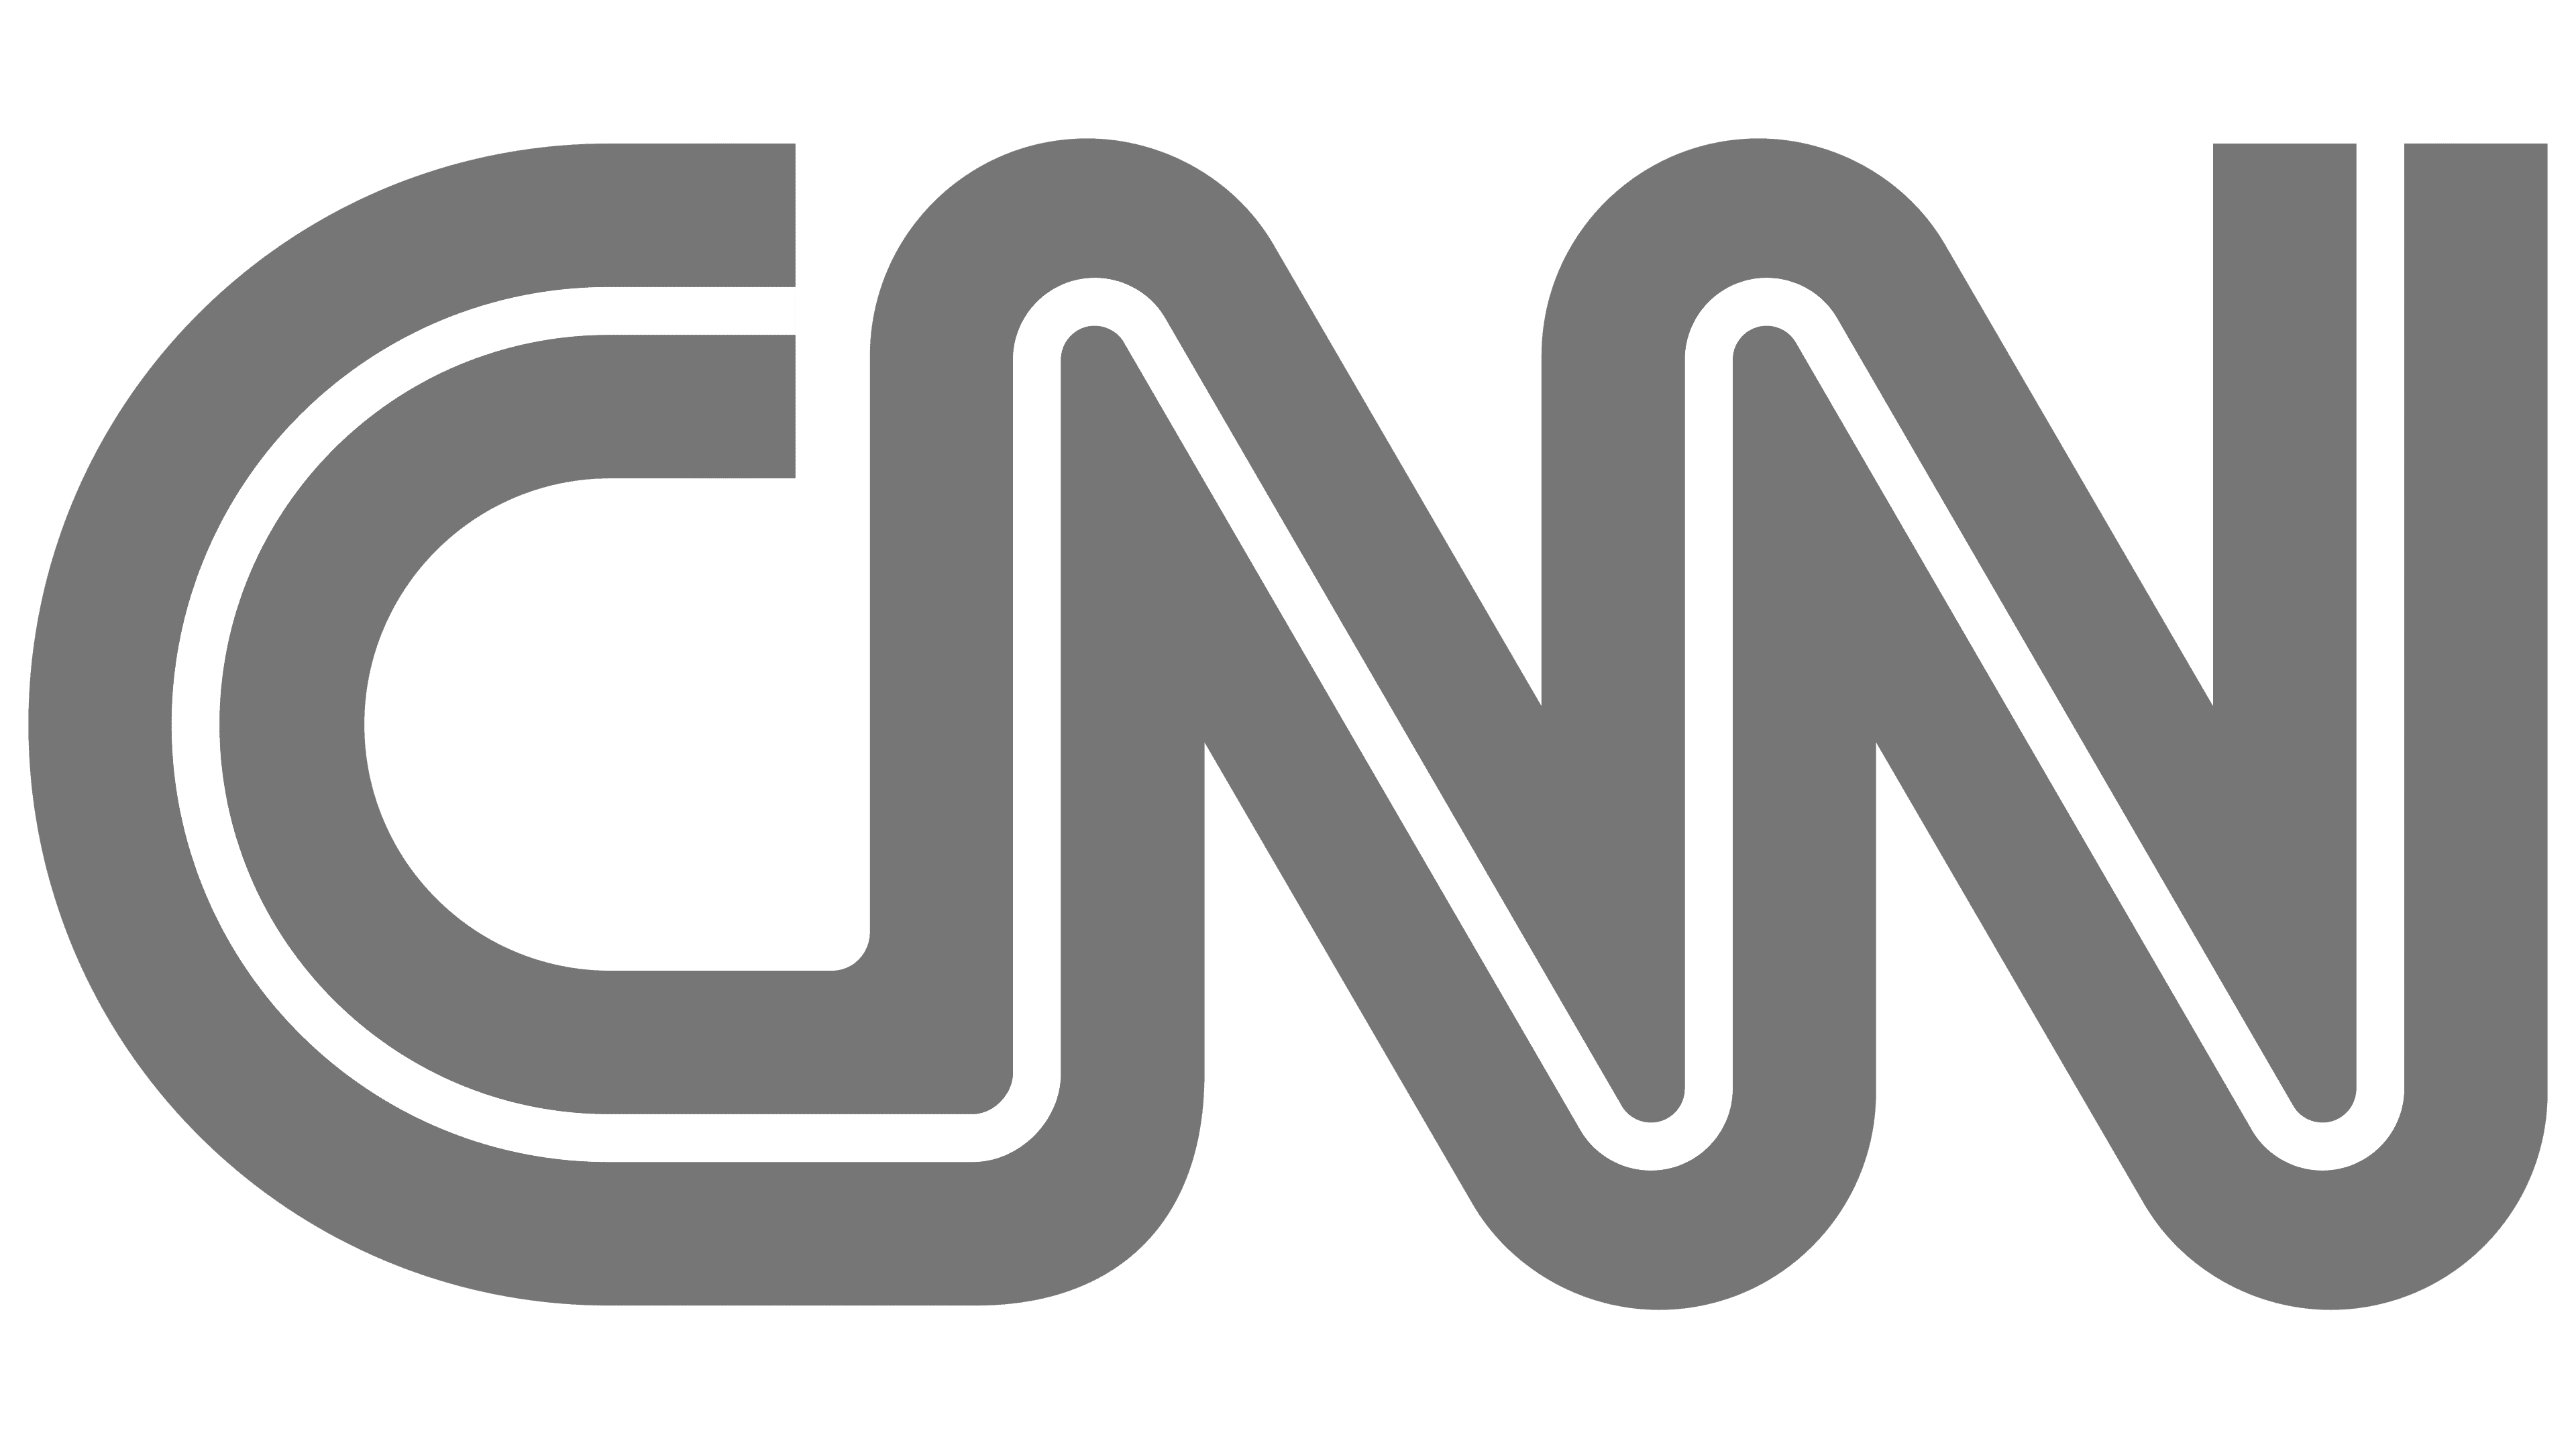 CNN noticias logo